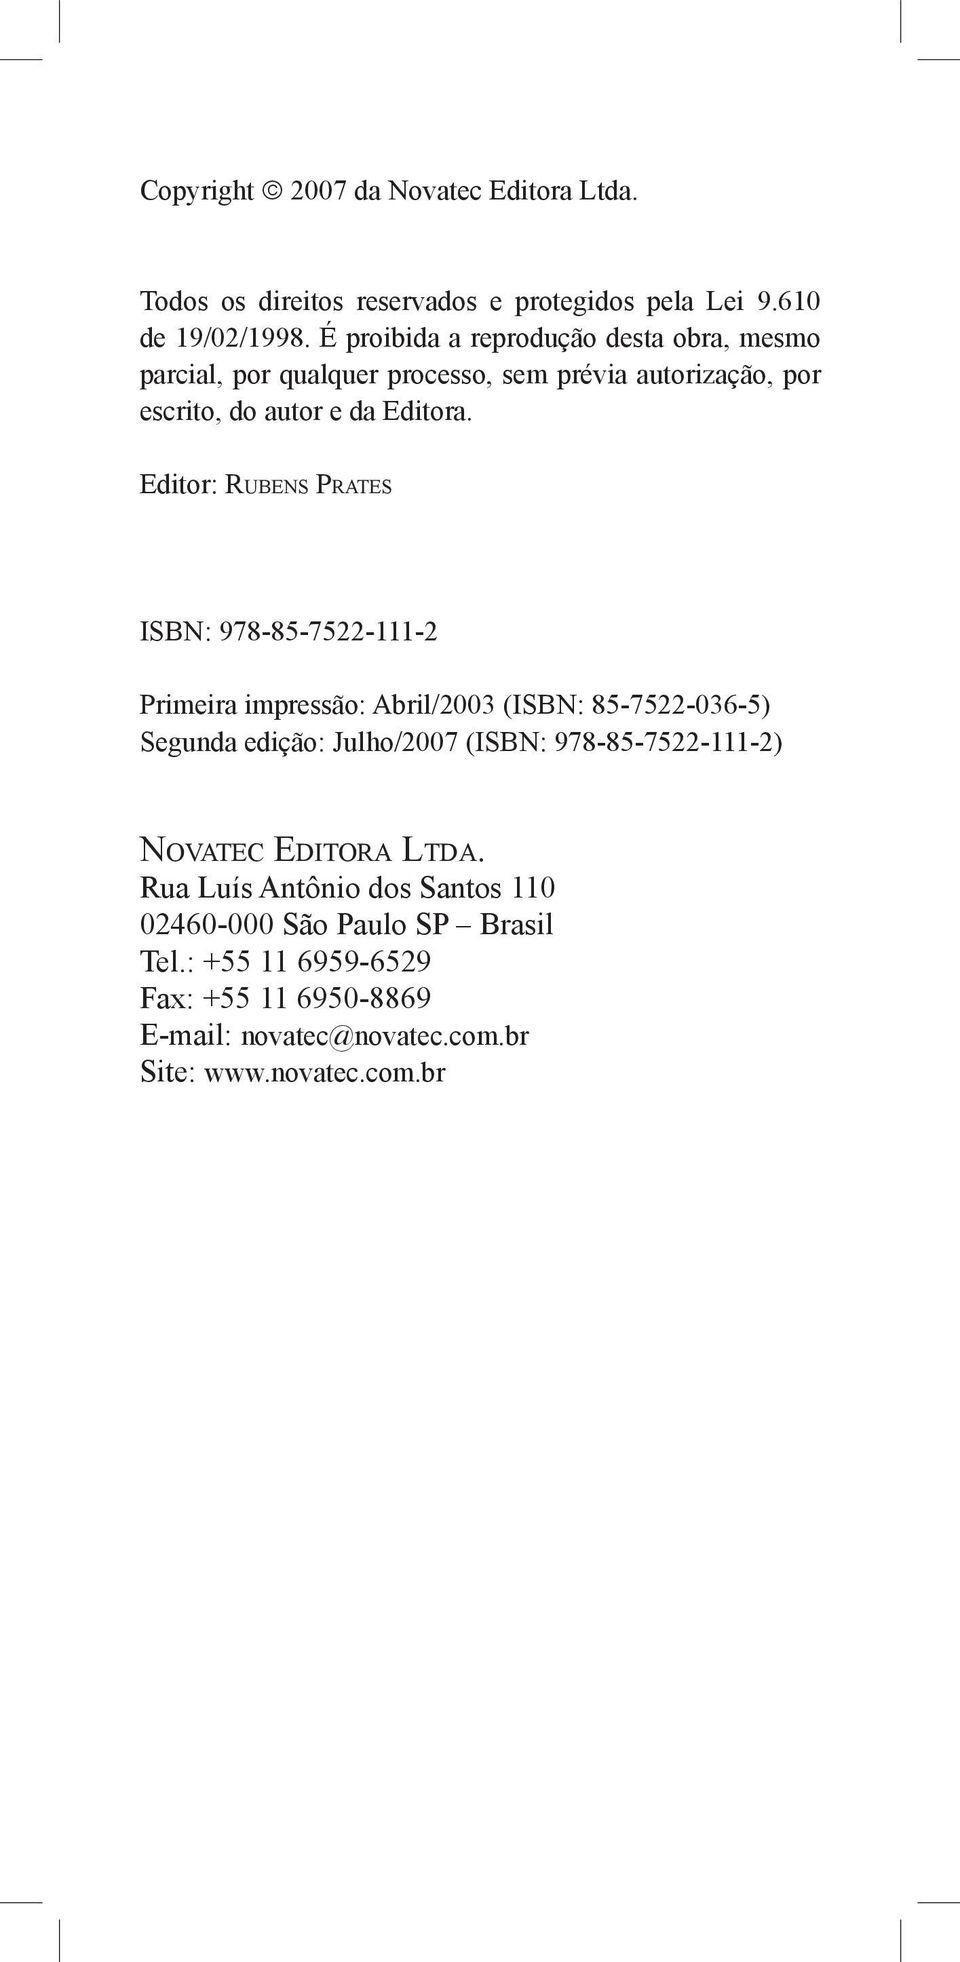 Editor: Rubens Prates ISBN: 978-85-7522-111-2 Primeira impressão: Abril/2003 (ISBN: 85-7522-036-5) Segunda edição: Julho/2007 (ISBN: